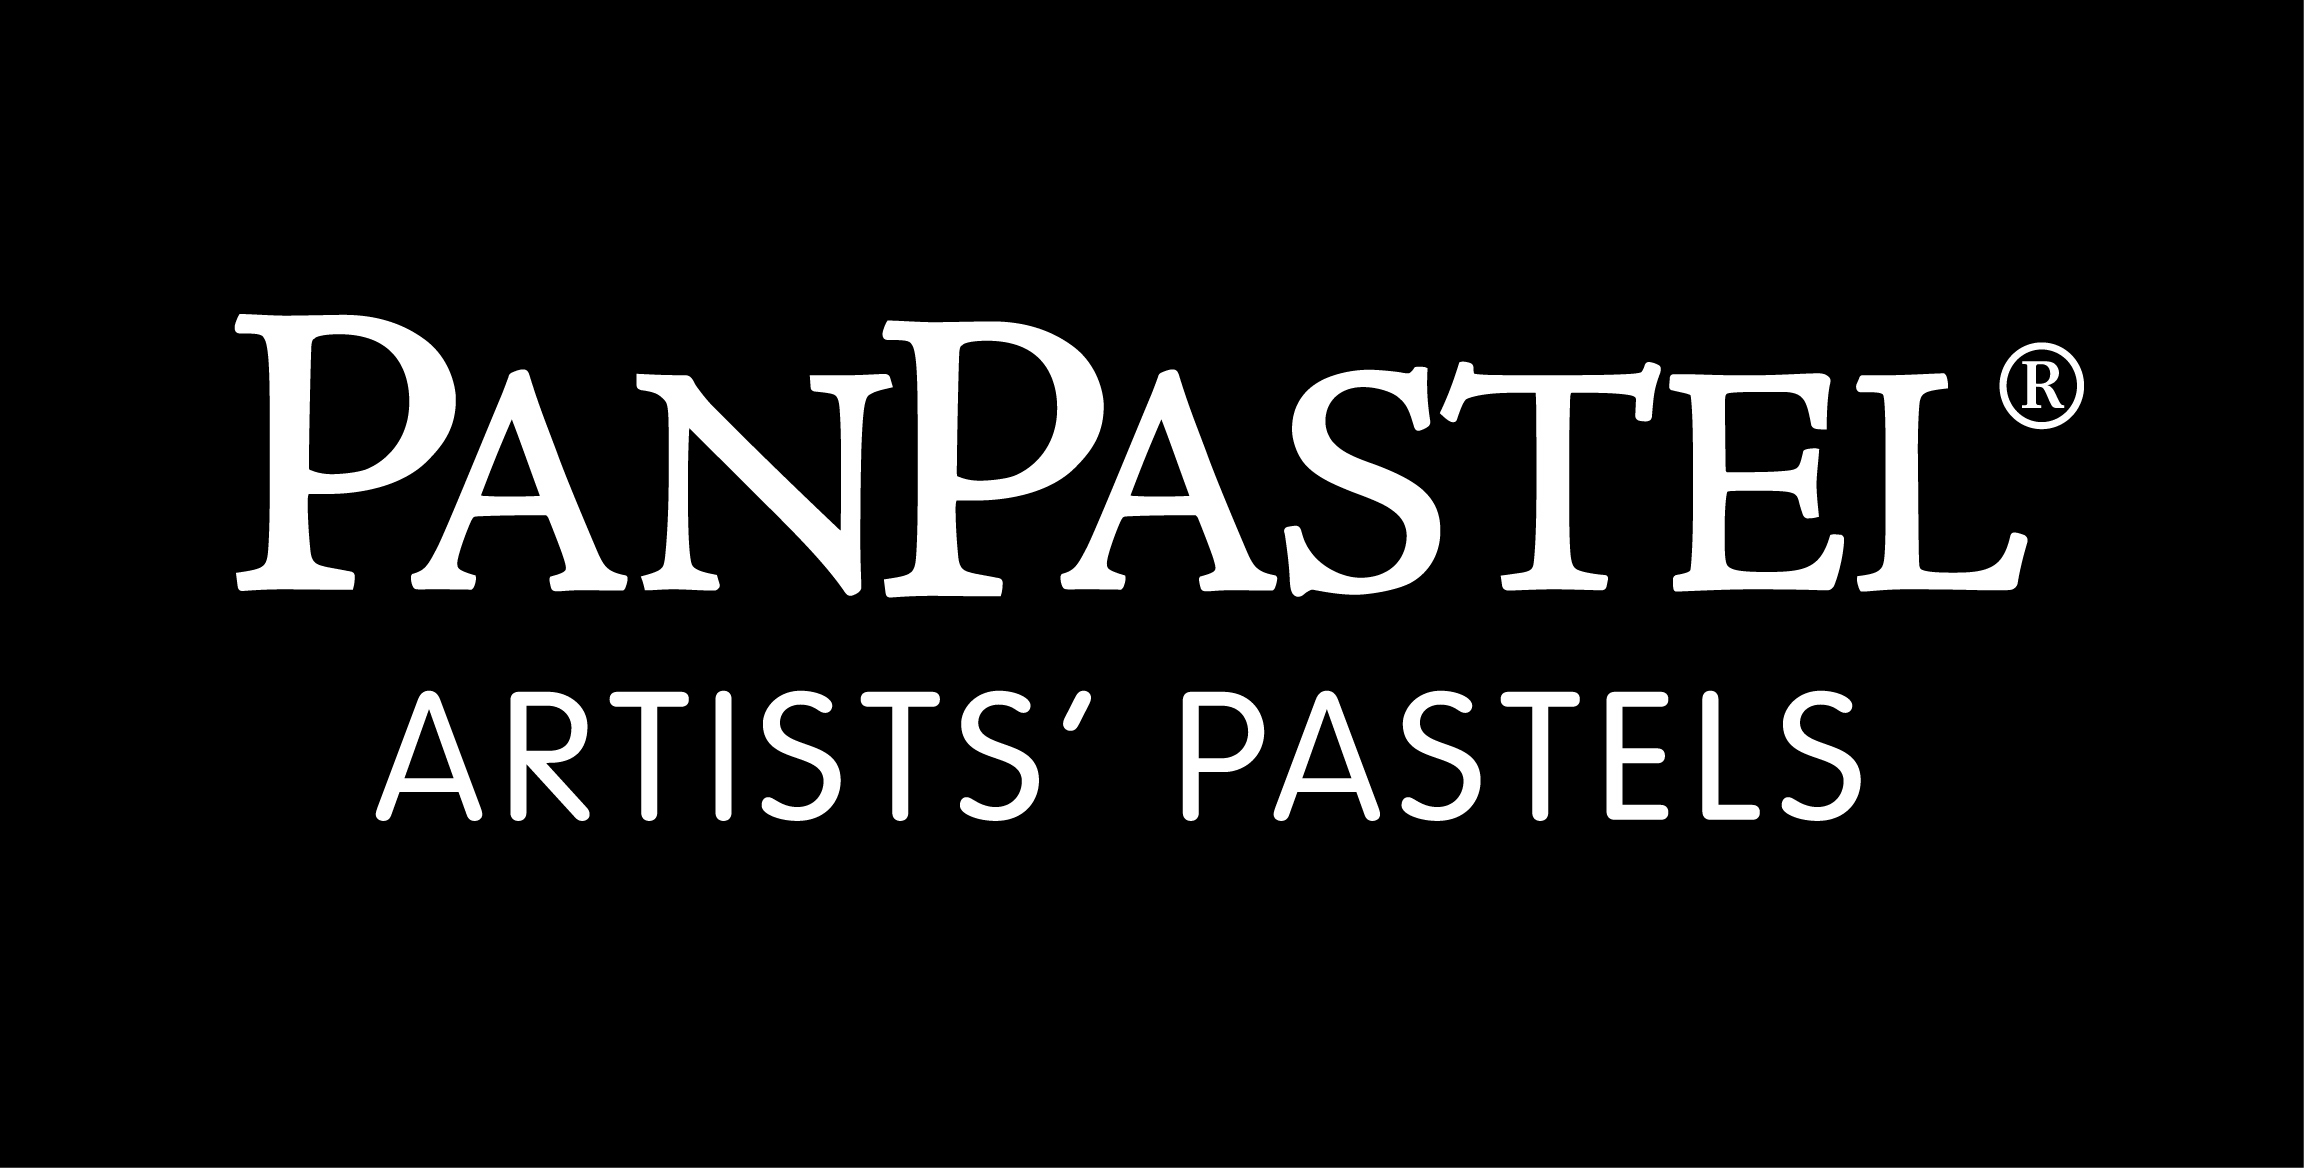 PanPastel_Artists_Pastels_REVERSE